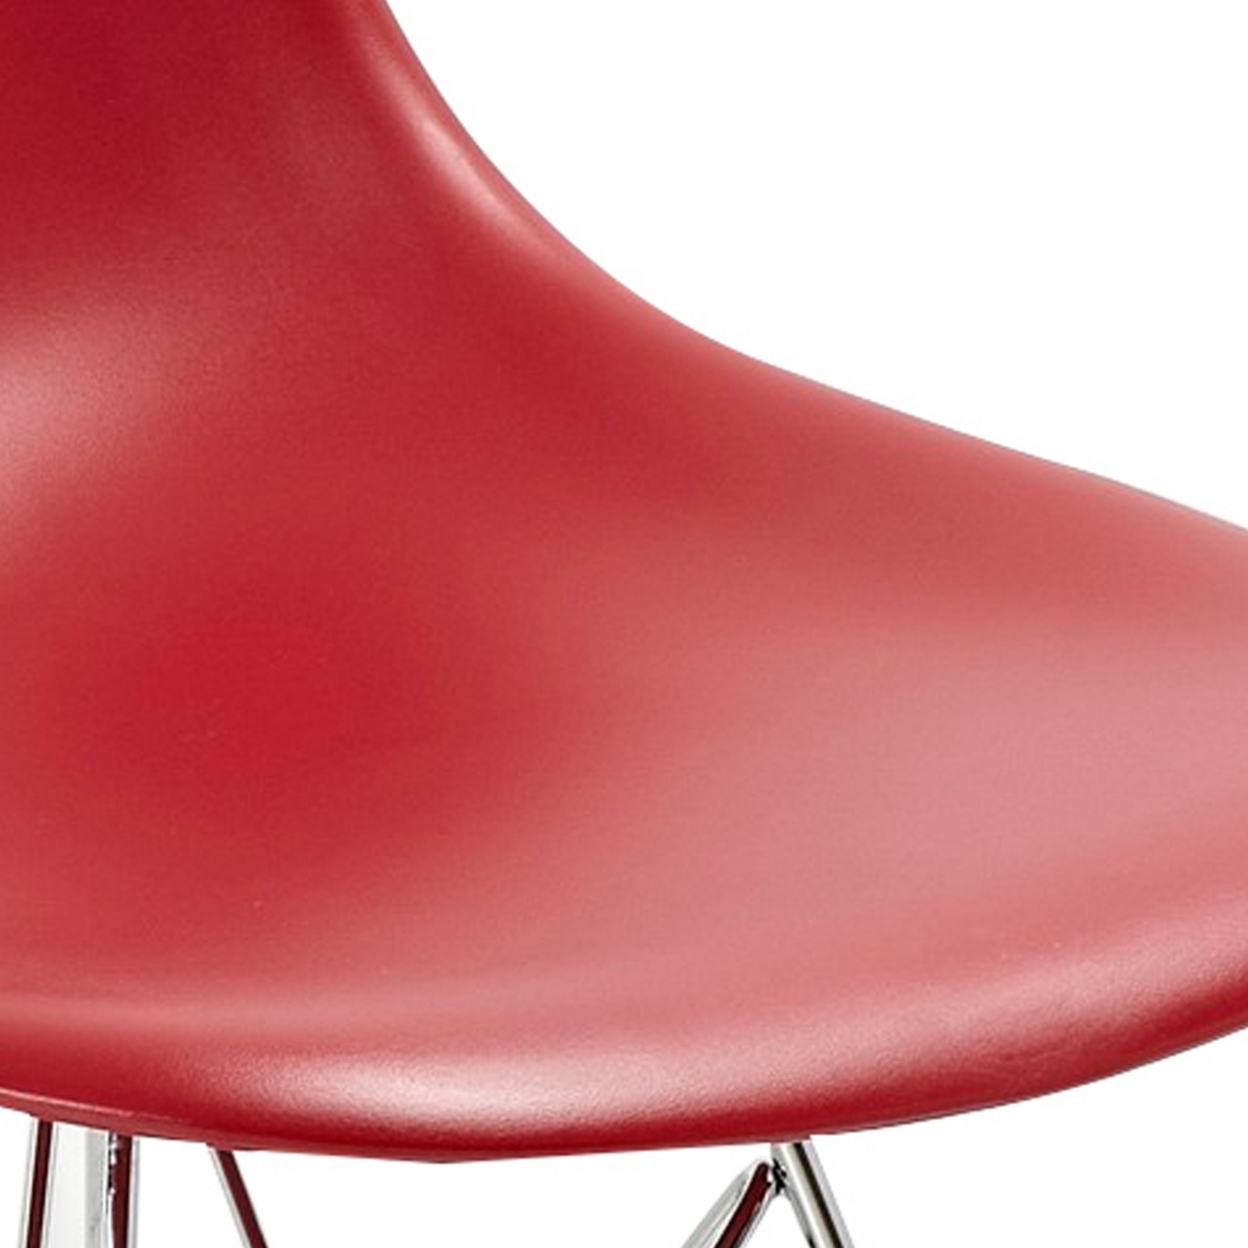 Louie 21 Inch Modern Side Chair, Chrome Finished Legs, Striking Red Finish- Saltoro Sherpi